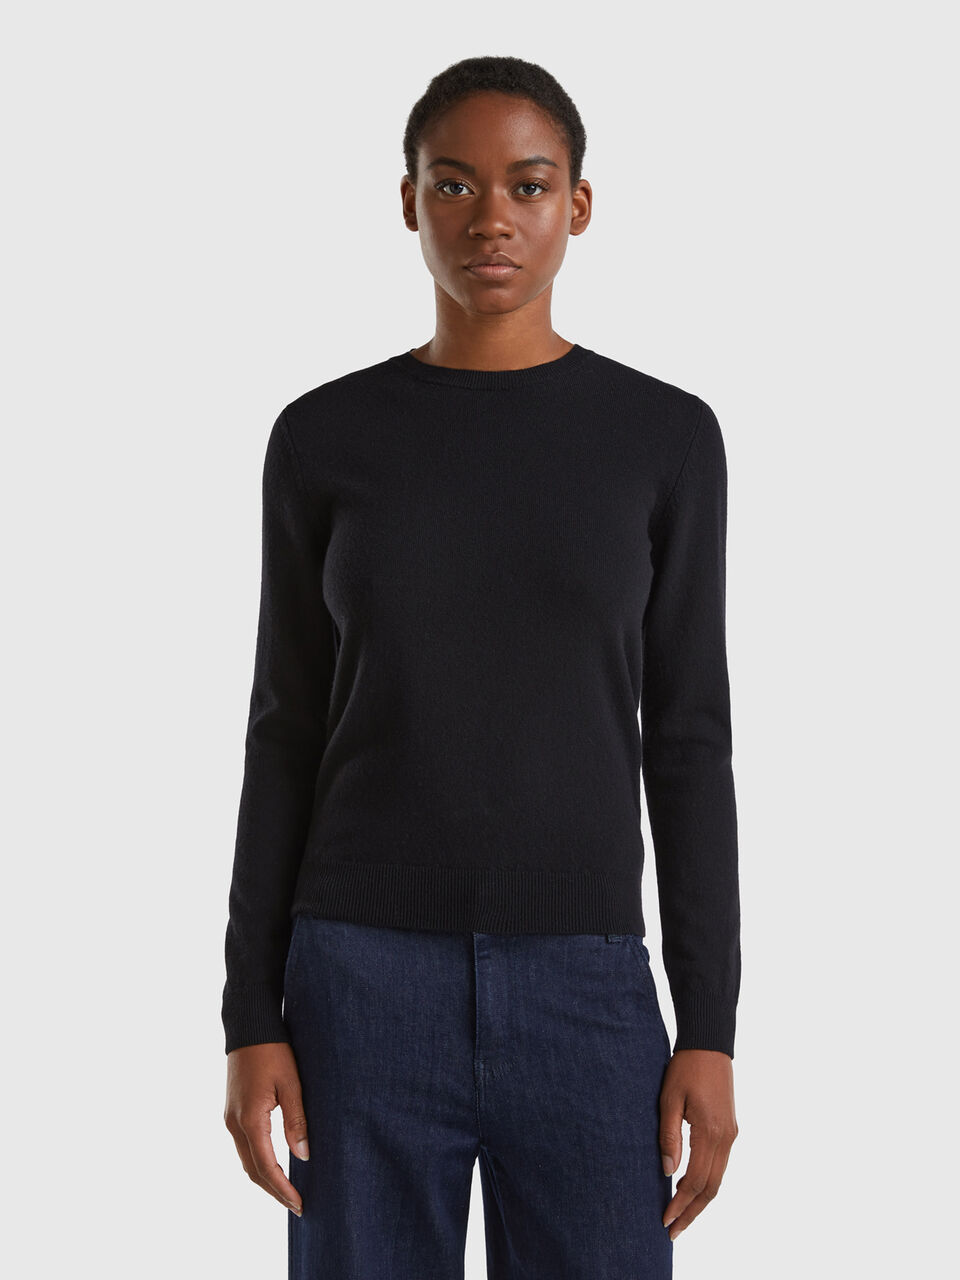 Black crew neck sweater in Merino wool - Black